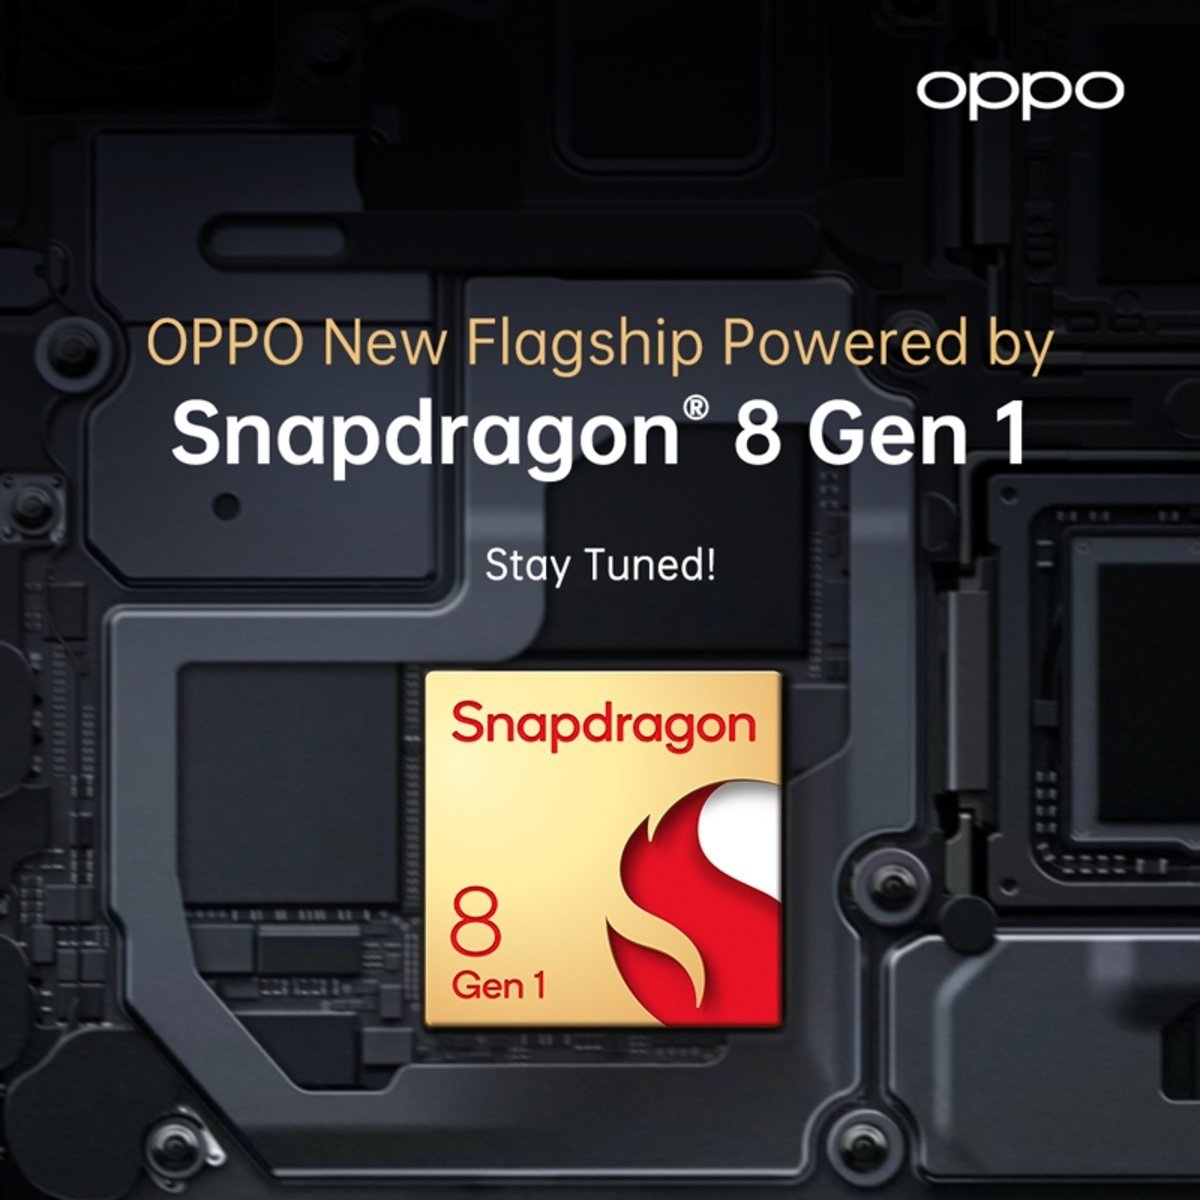 Movil de OPPO Con Snapdragon 8 Gen 1